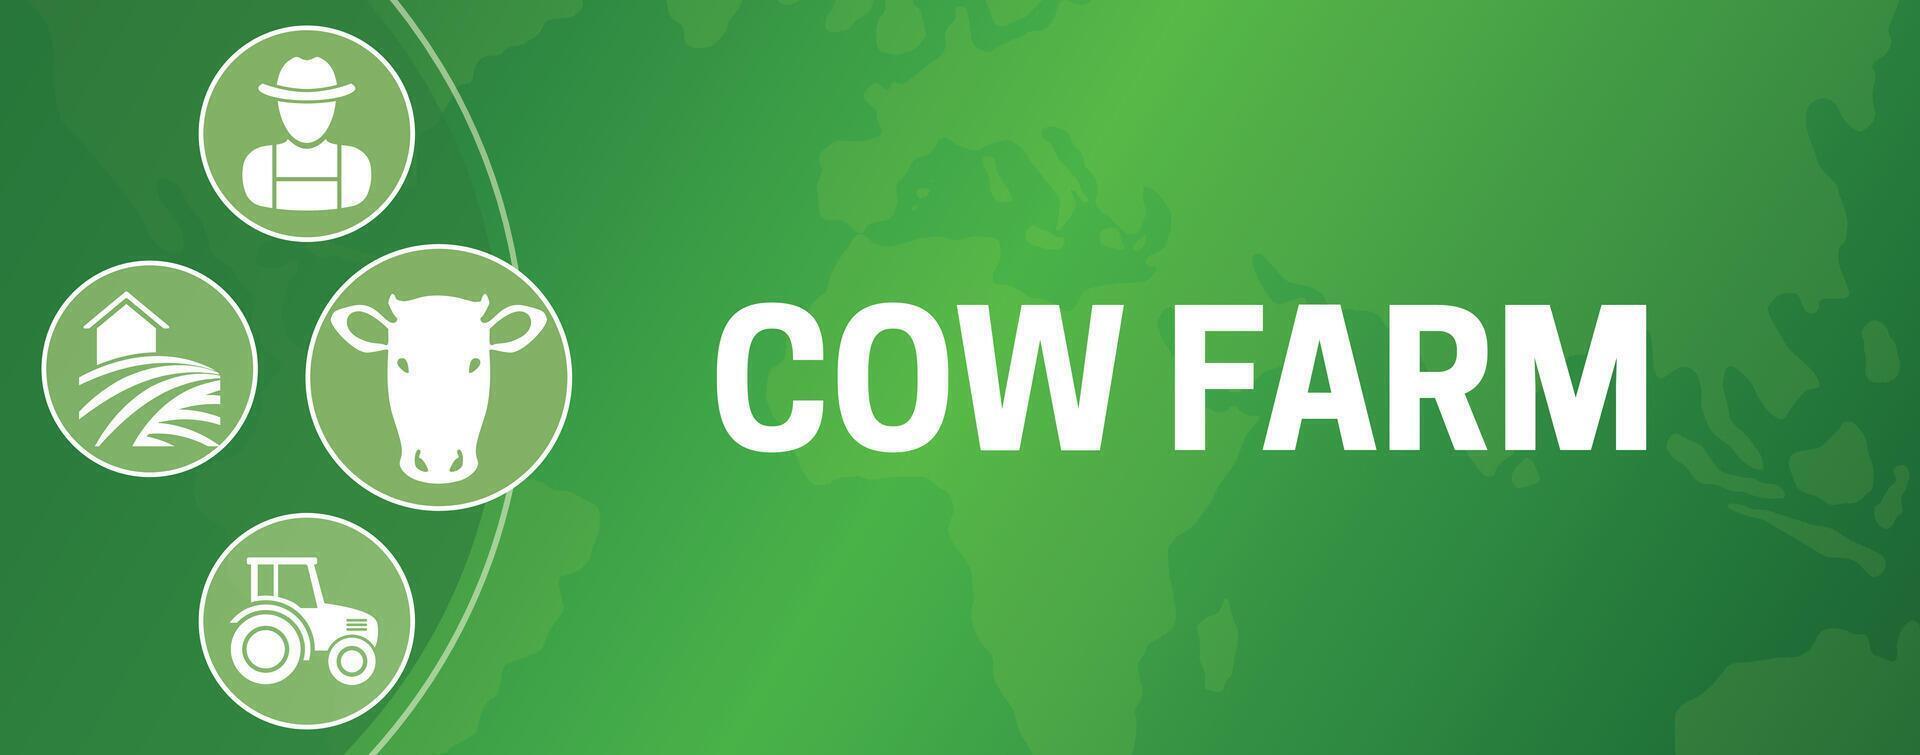 Cow Farm Illustration Background Design vector